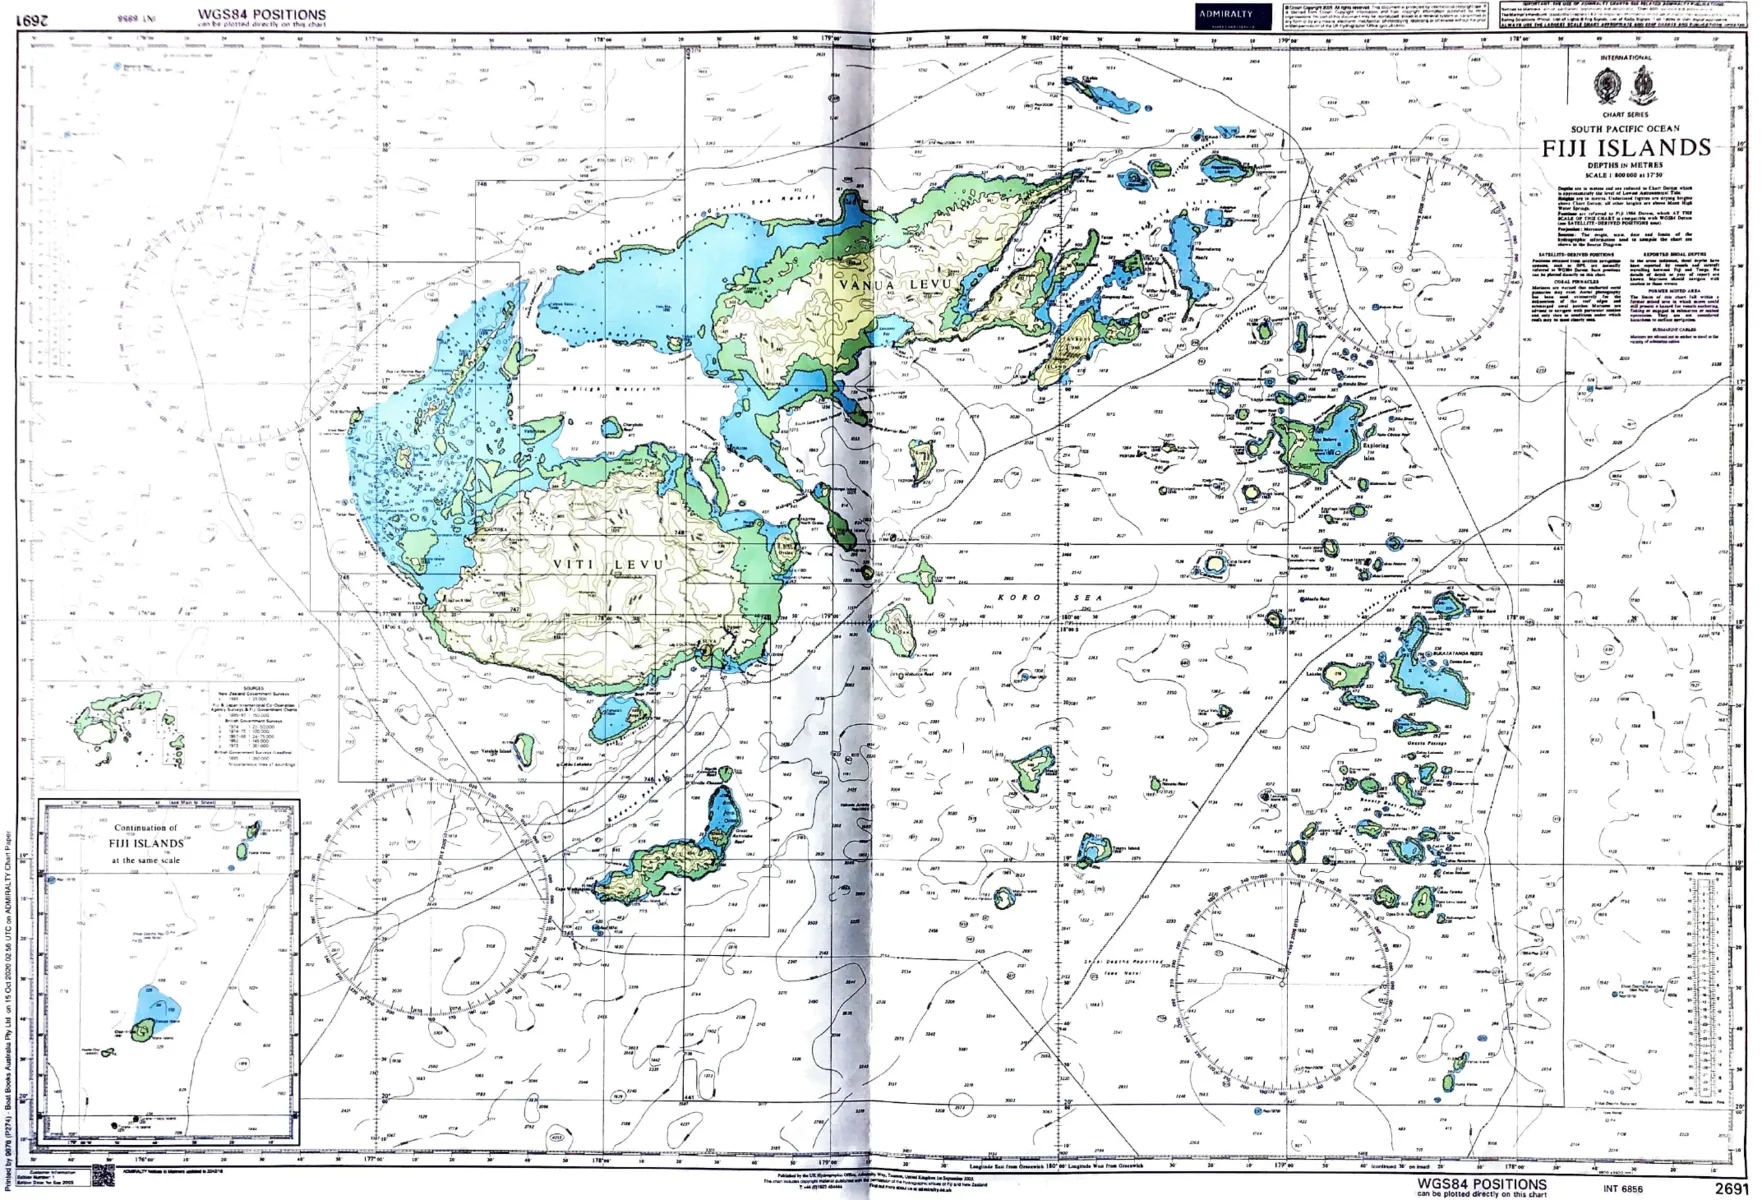 Admiralty Charts of Fiji